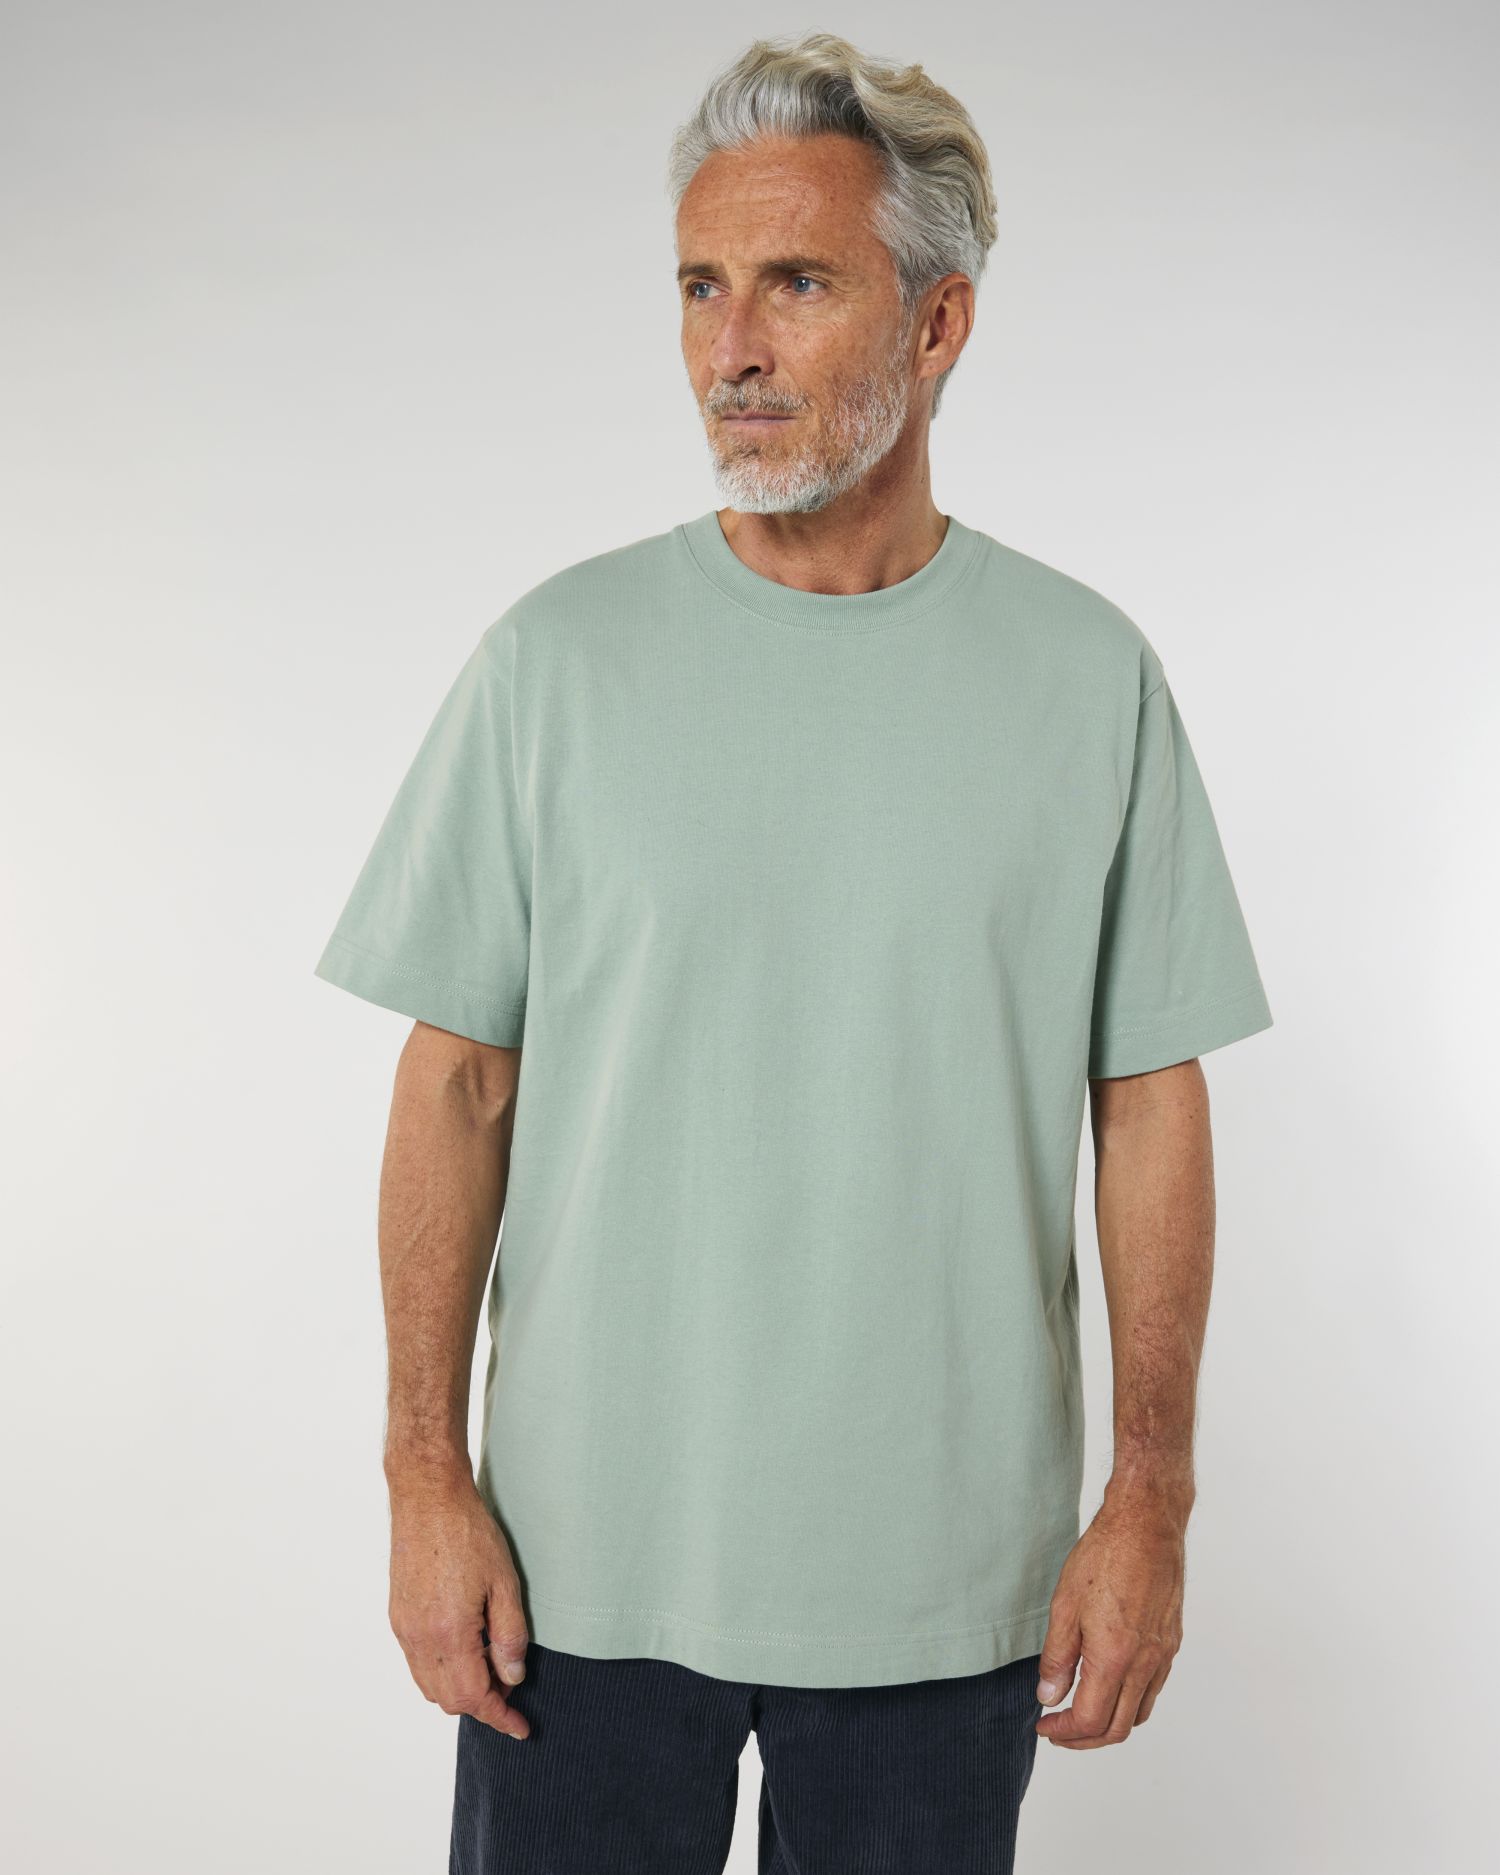 T-Shirt Freestyler in Farbe Aloe